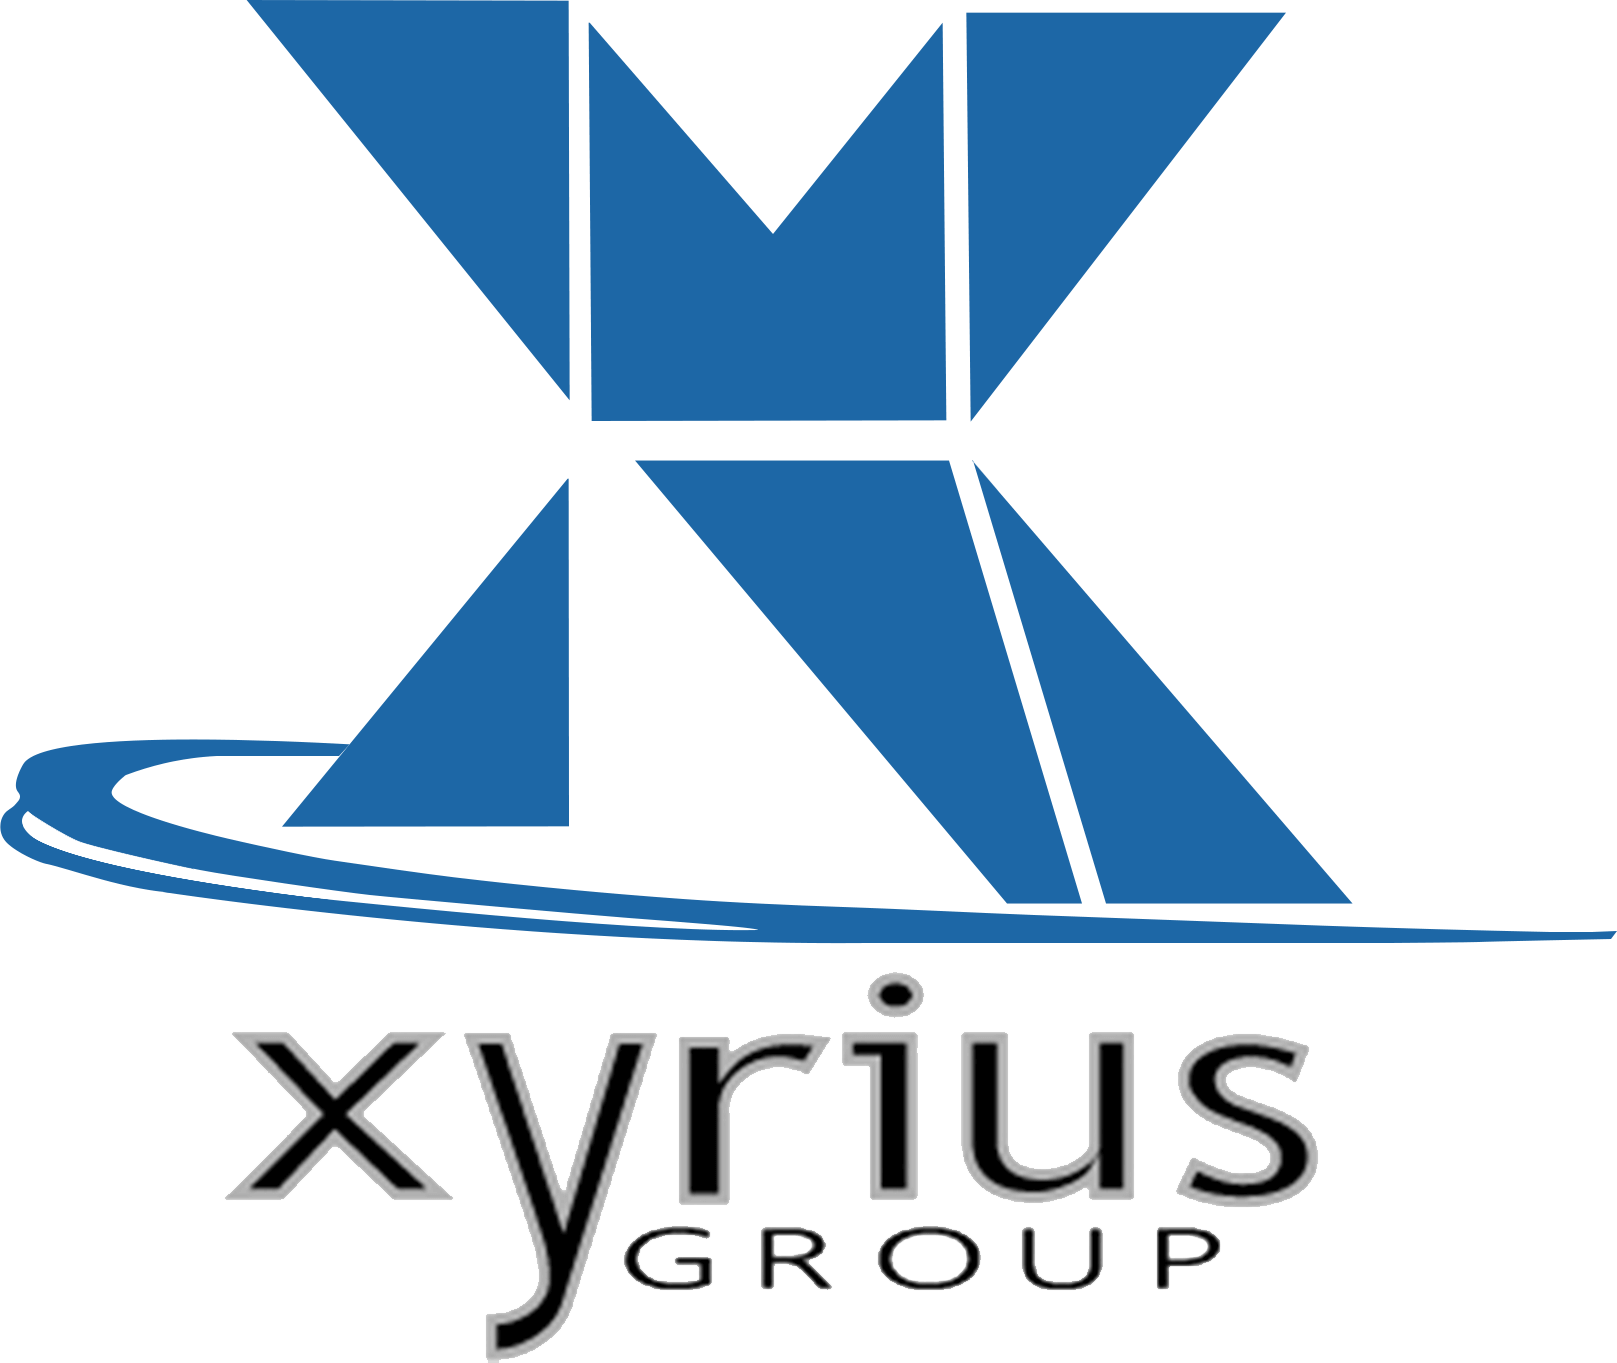 Xyrius Group